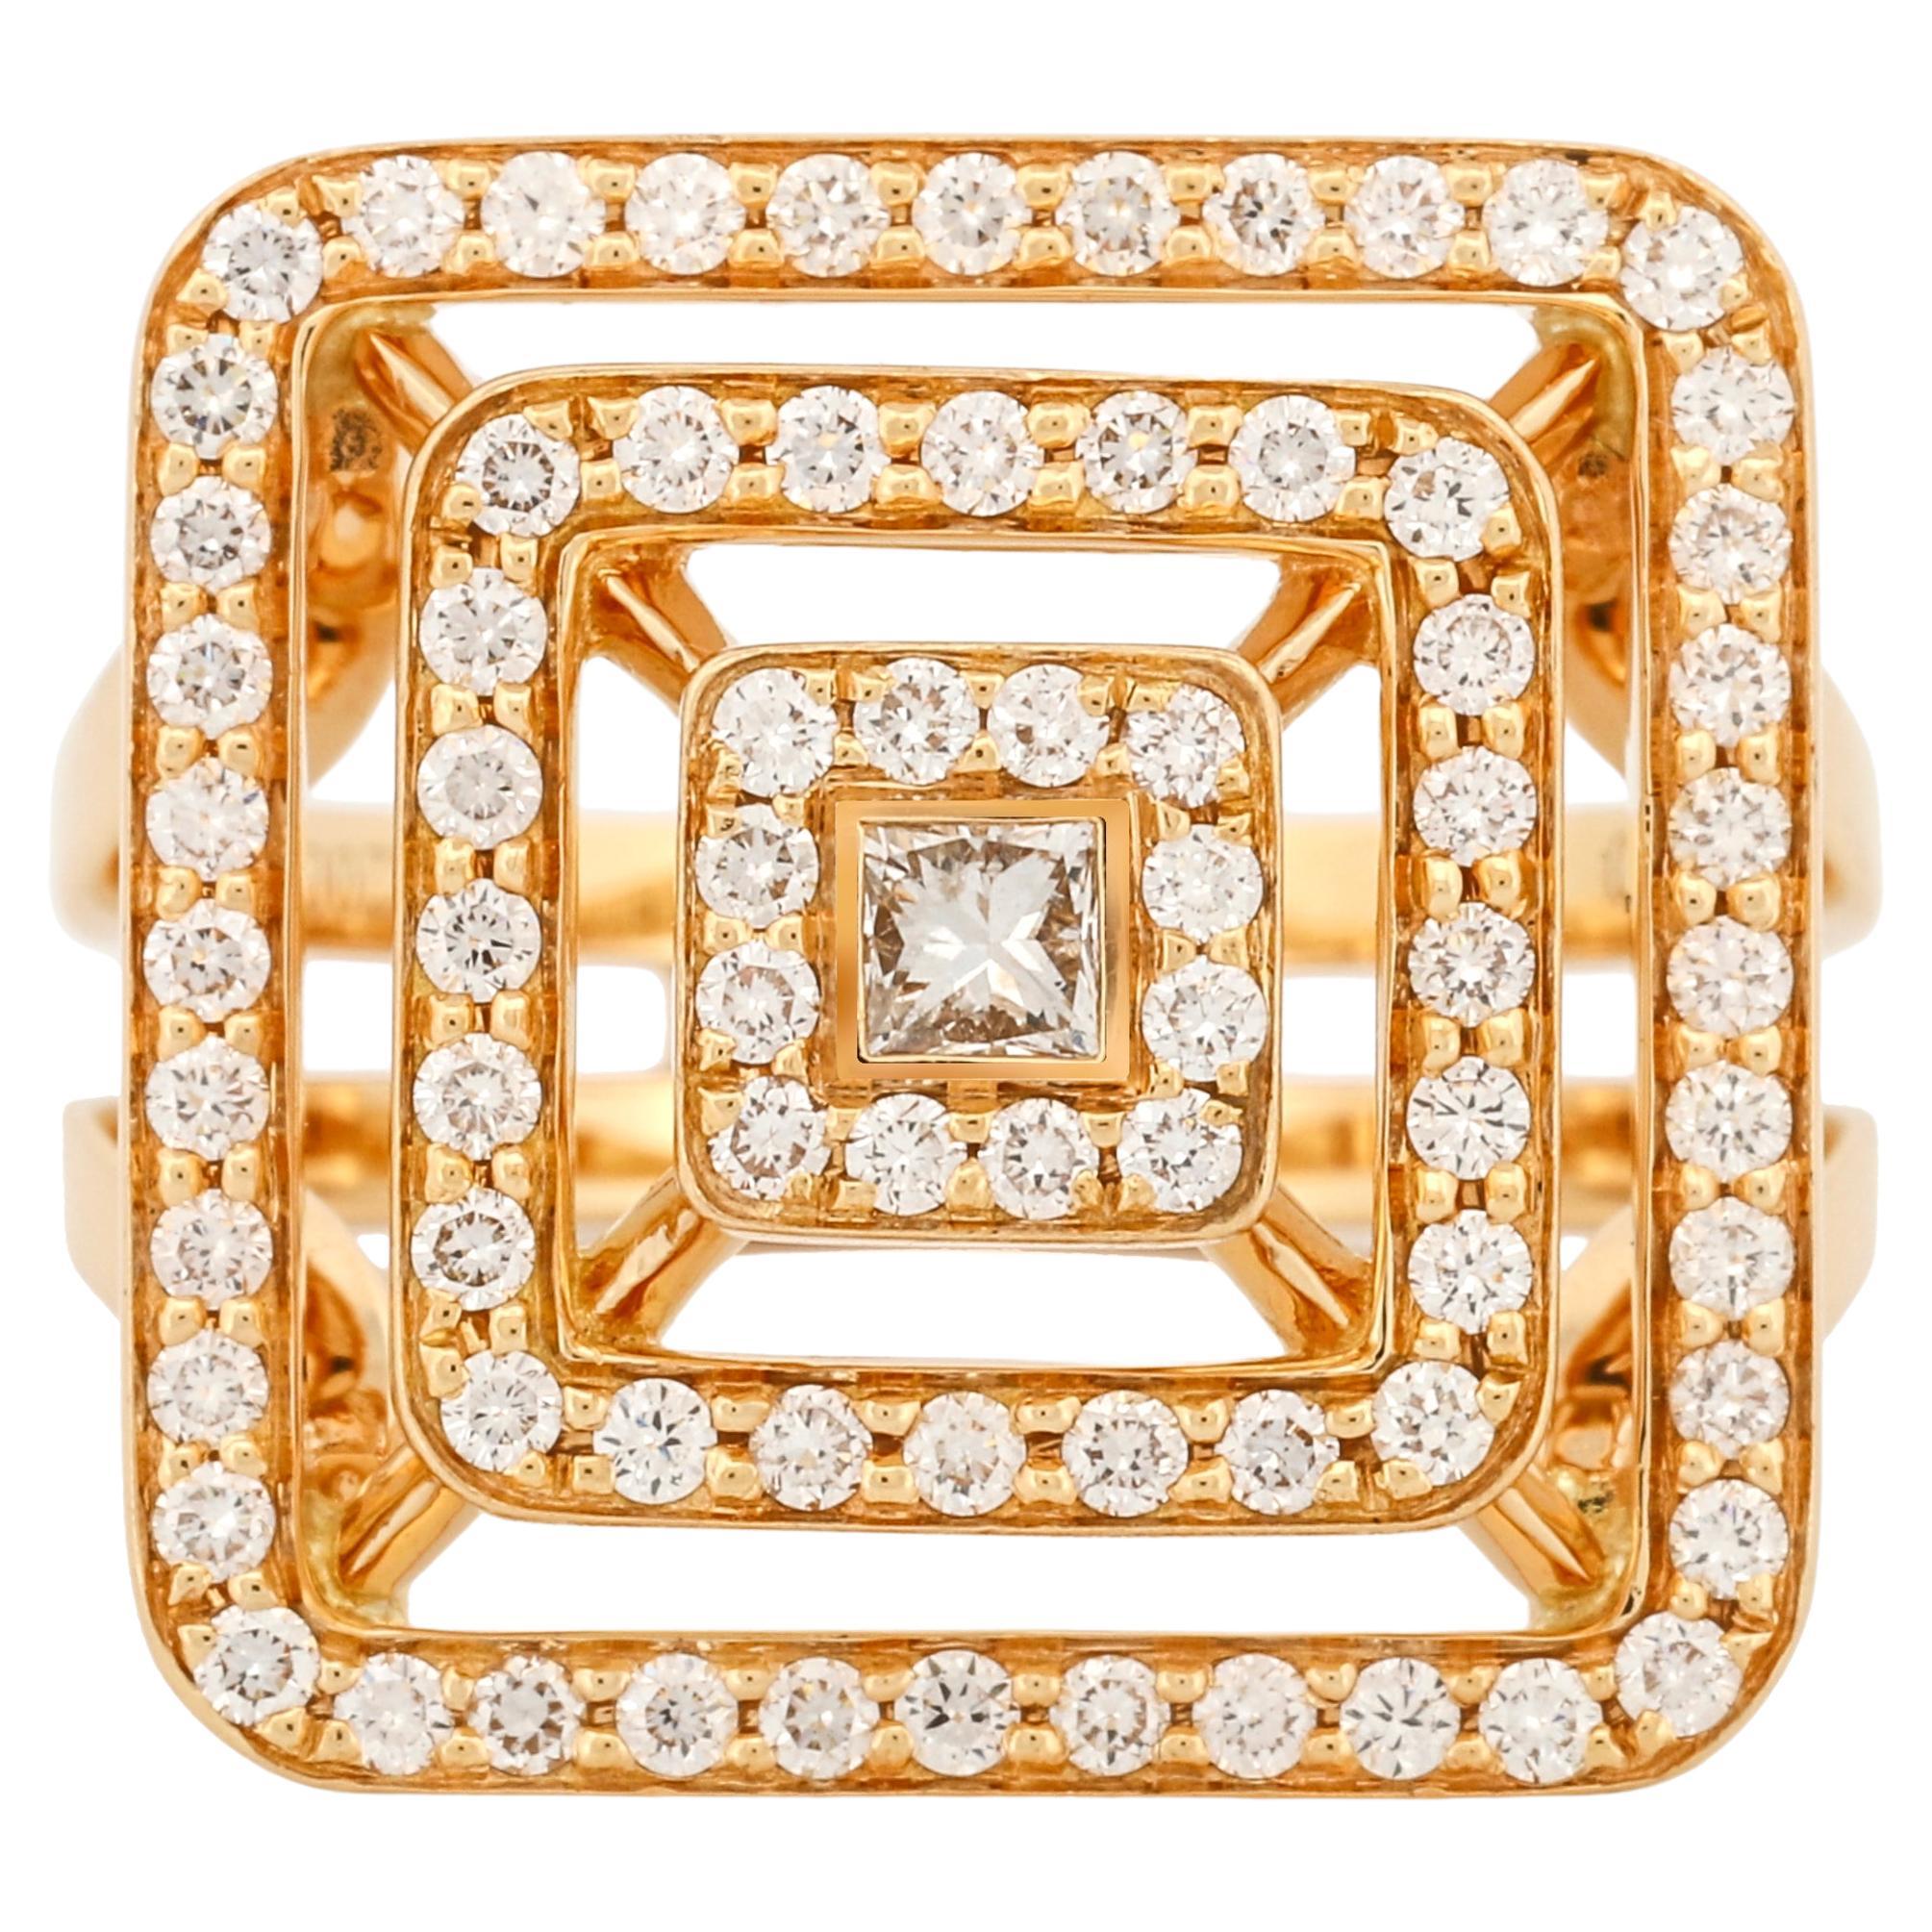 Mimi So Piece Pyramid Diamond Ring in 18k Yellow Gold Size 6.5